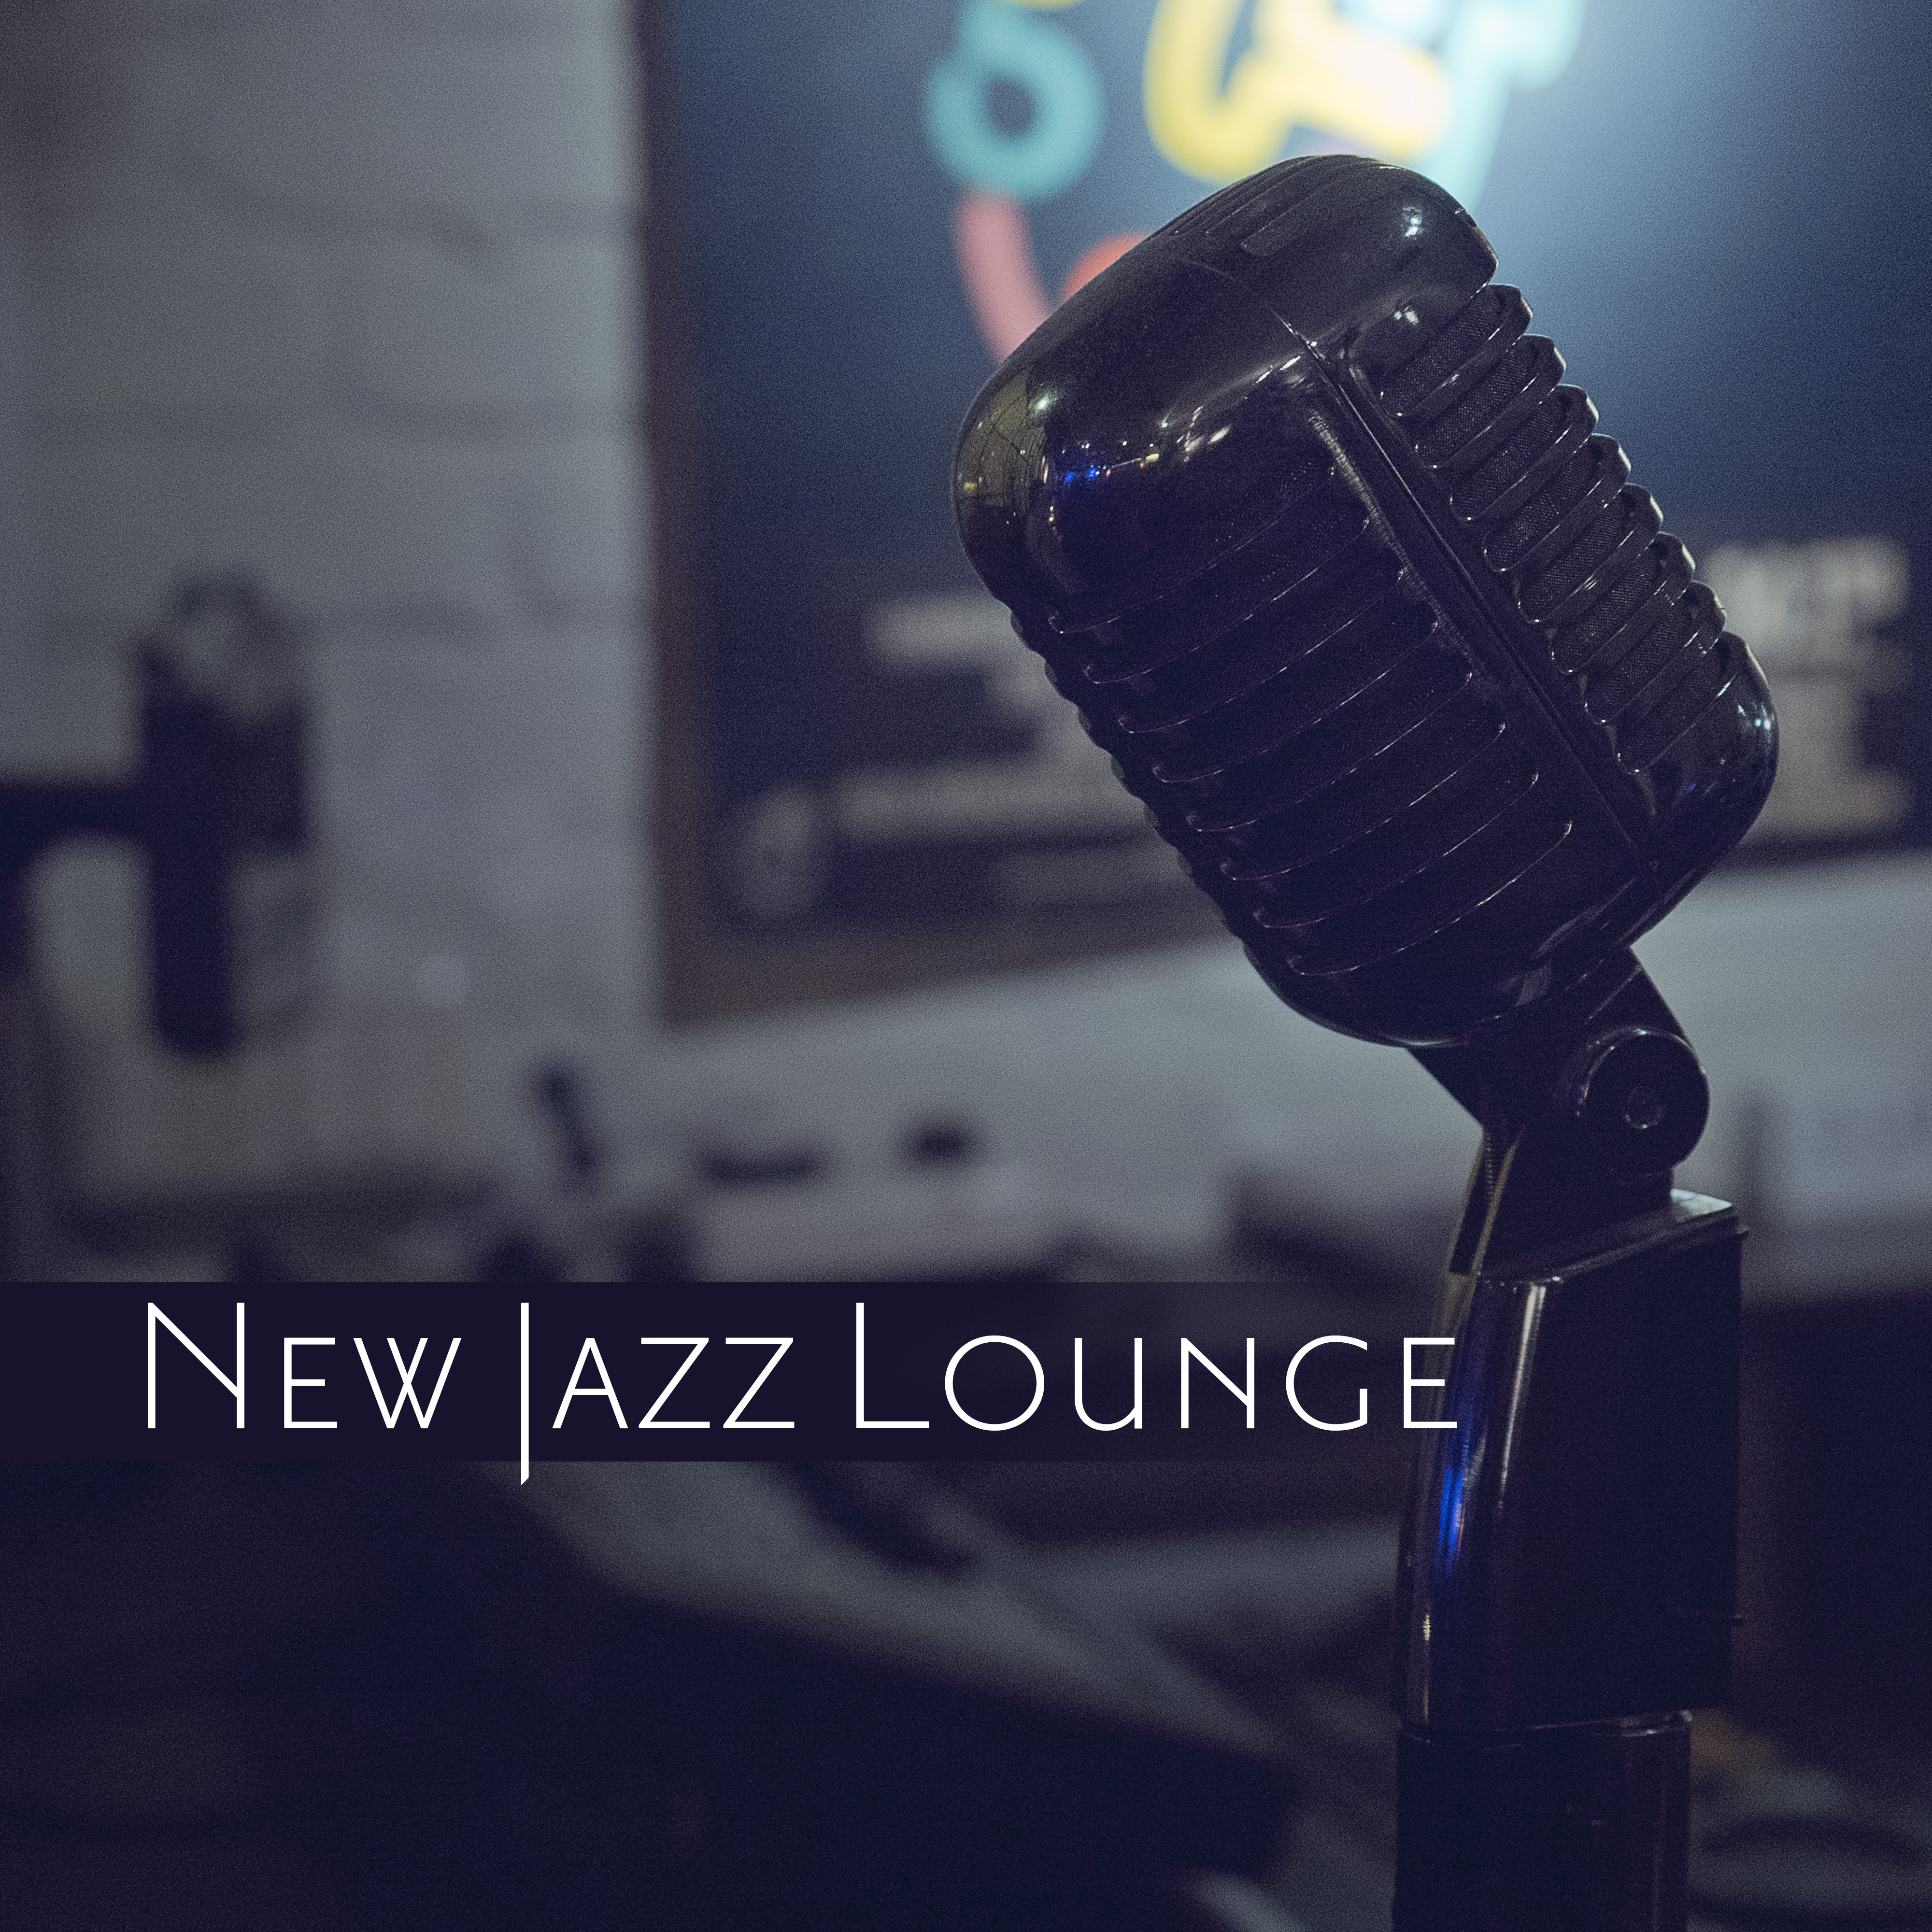 New Jazz Lounge  Best Smooth Jazz 2017, Saxophone  Piano in the Background,  Jazz